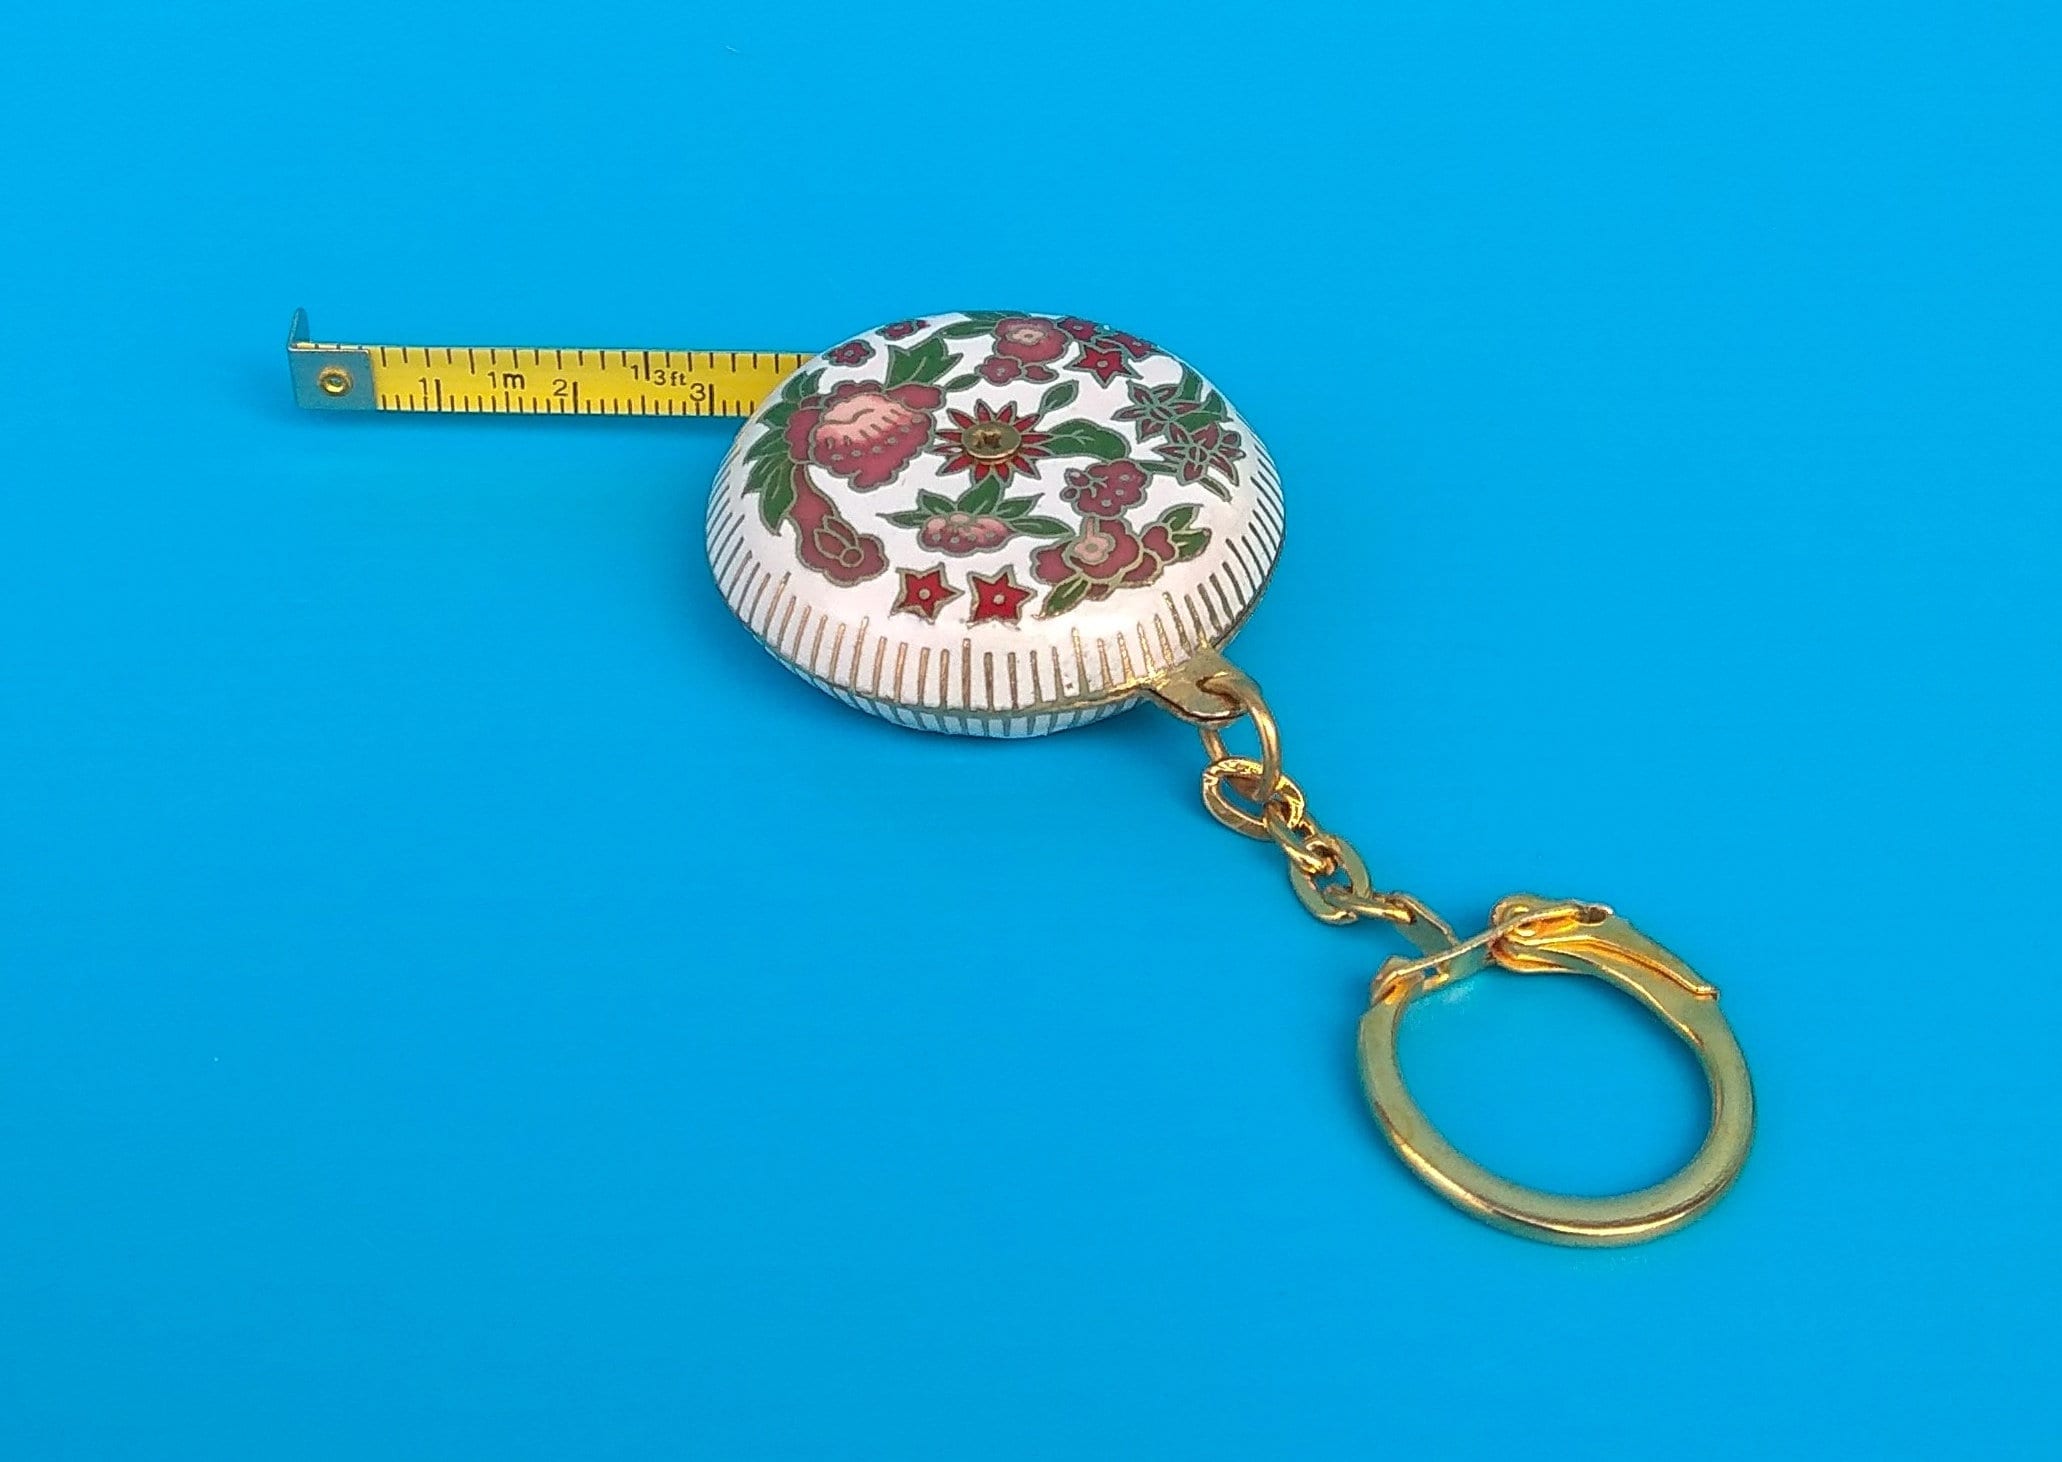 Wholesale Portable 1M Tape Measure Mini Soft Ruler For Keychain